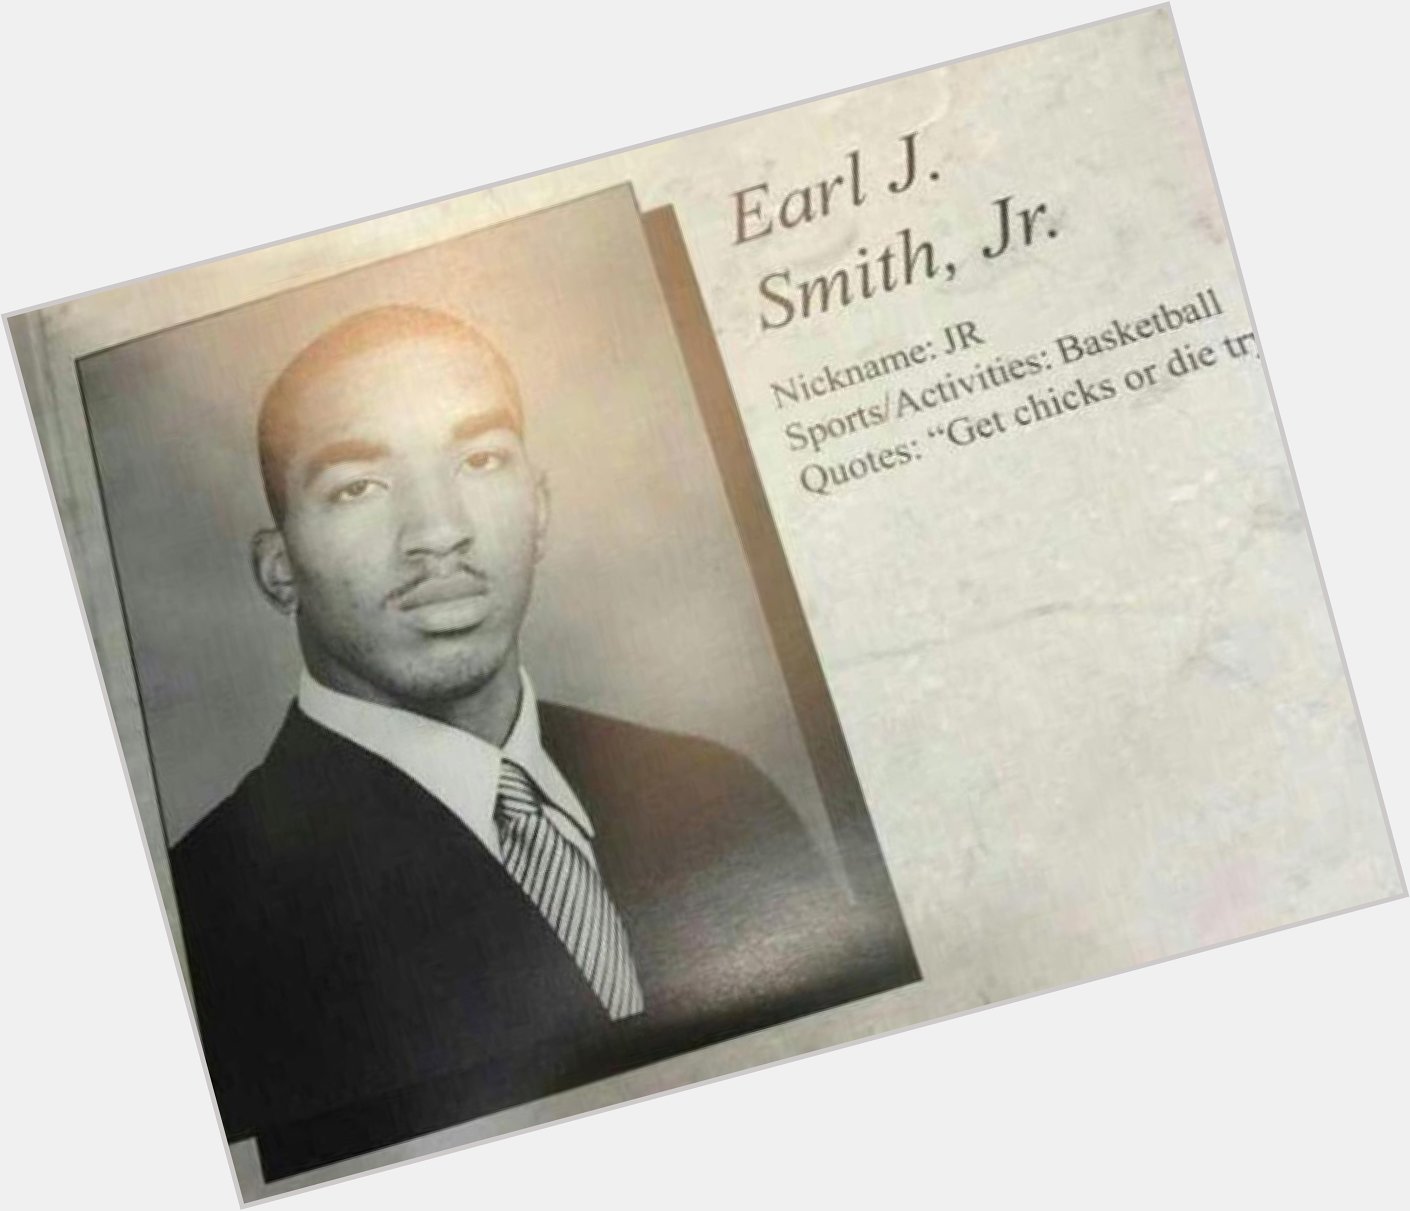 Happy Birthday to the GOAT, JR Smith. 